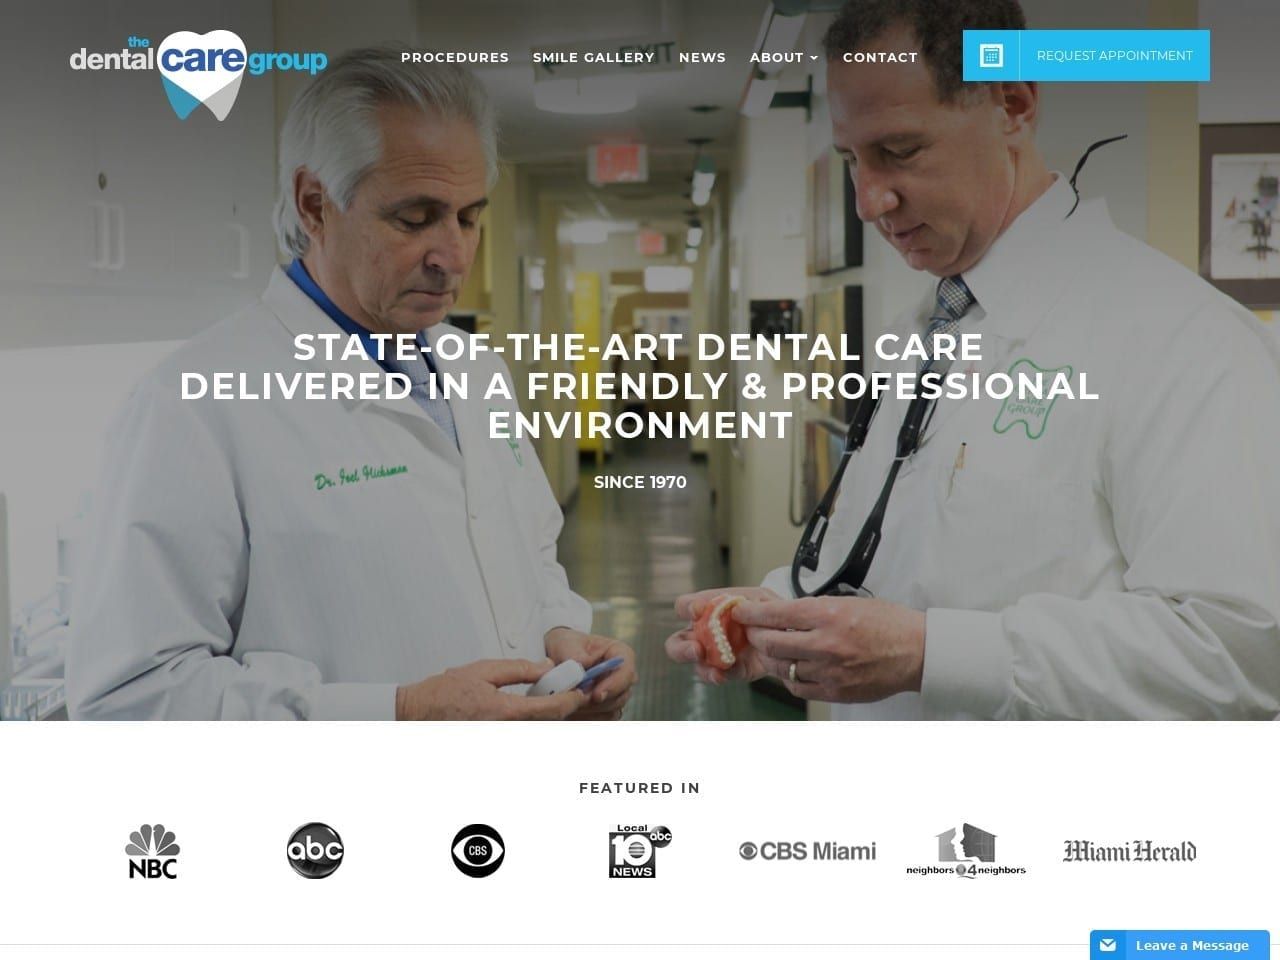 The Dental Care Group Website Screenshot from dentalcaregroup.net